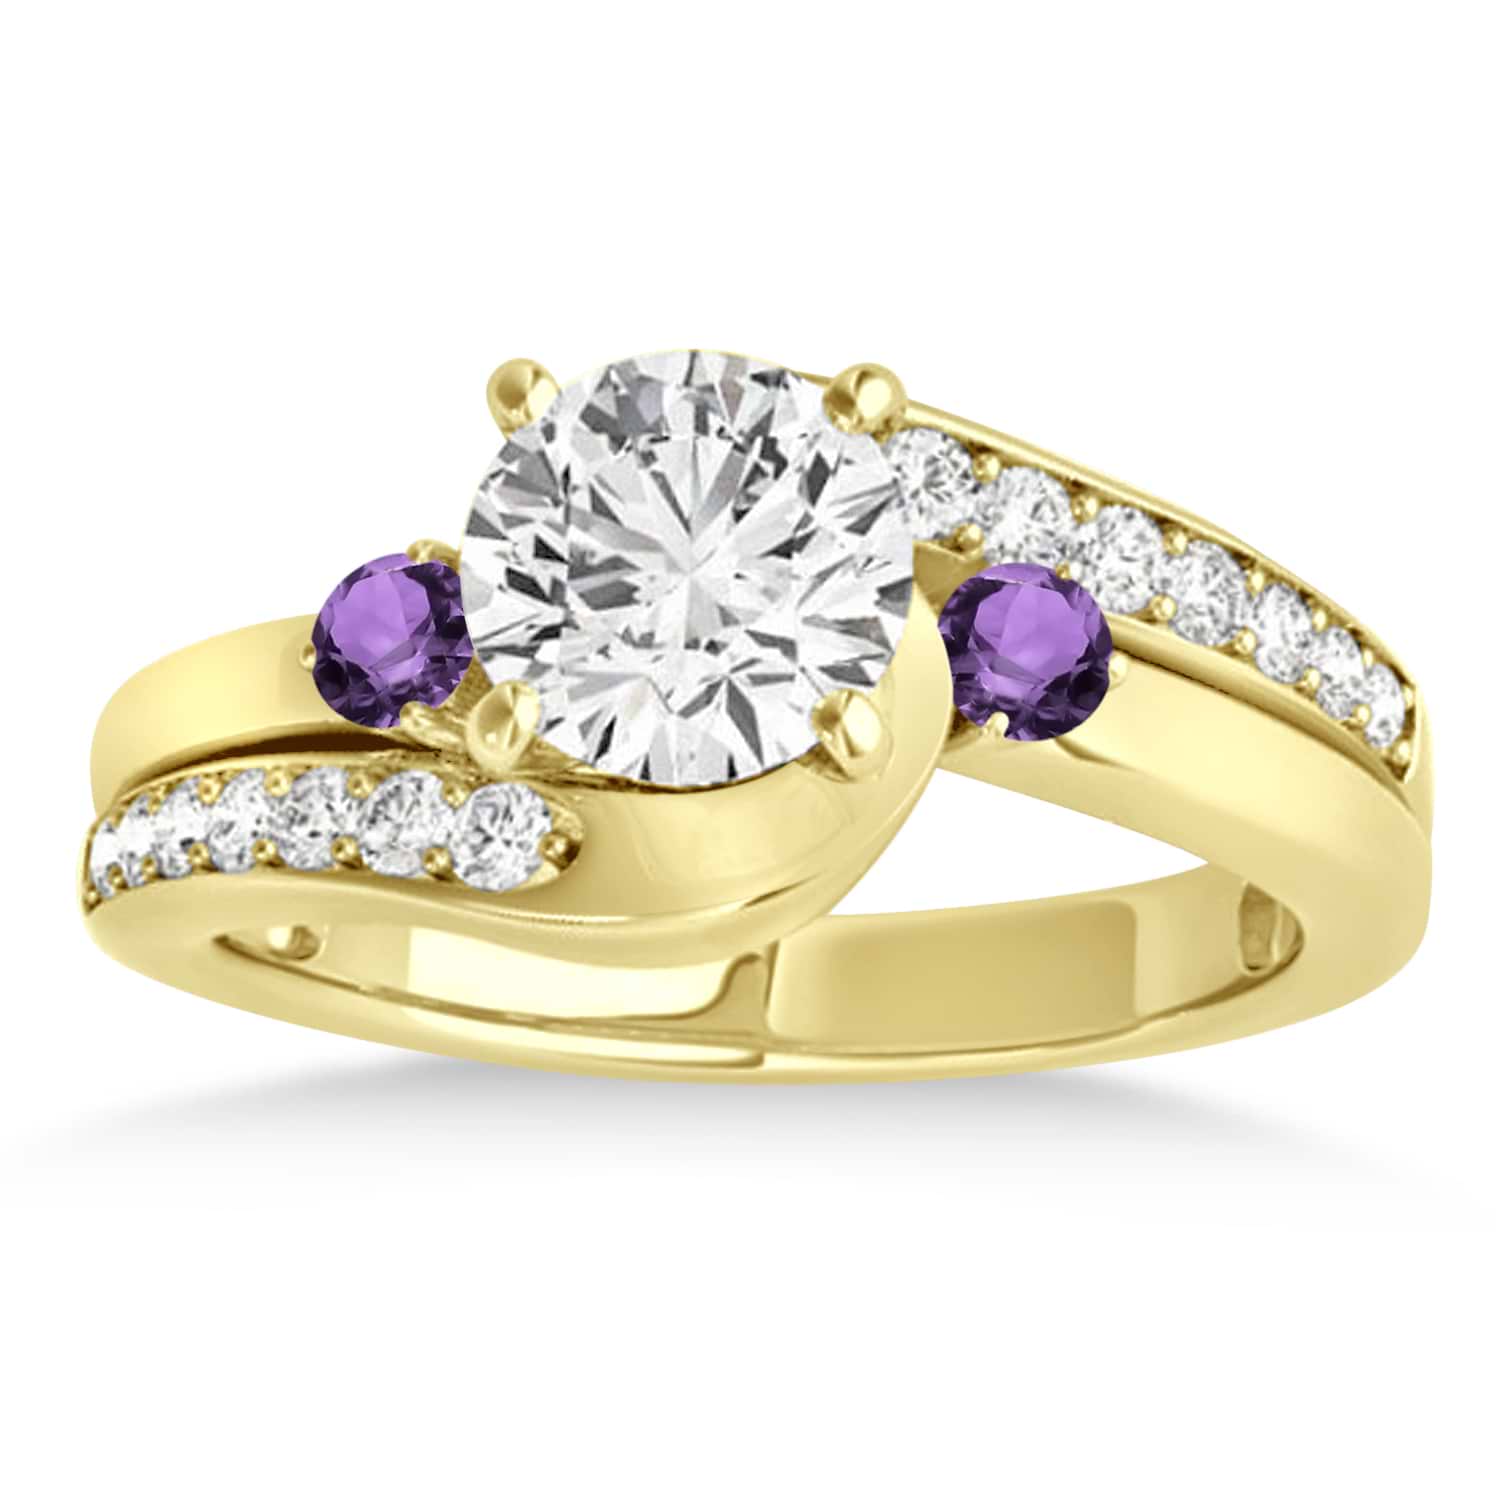 Swirl Design Amethyst & Diamond Engagement Ring Setting 14k Yellow Gold 0.38ct